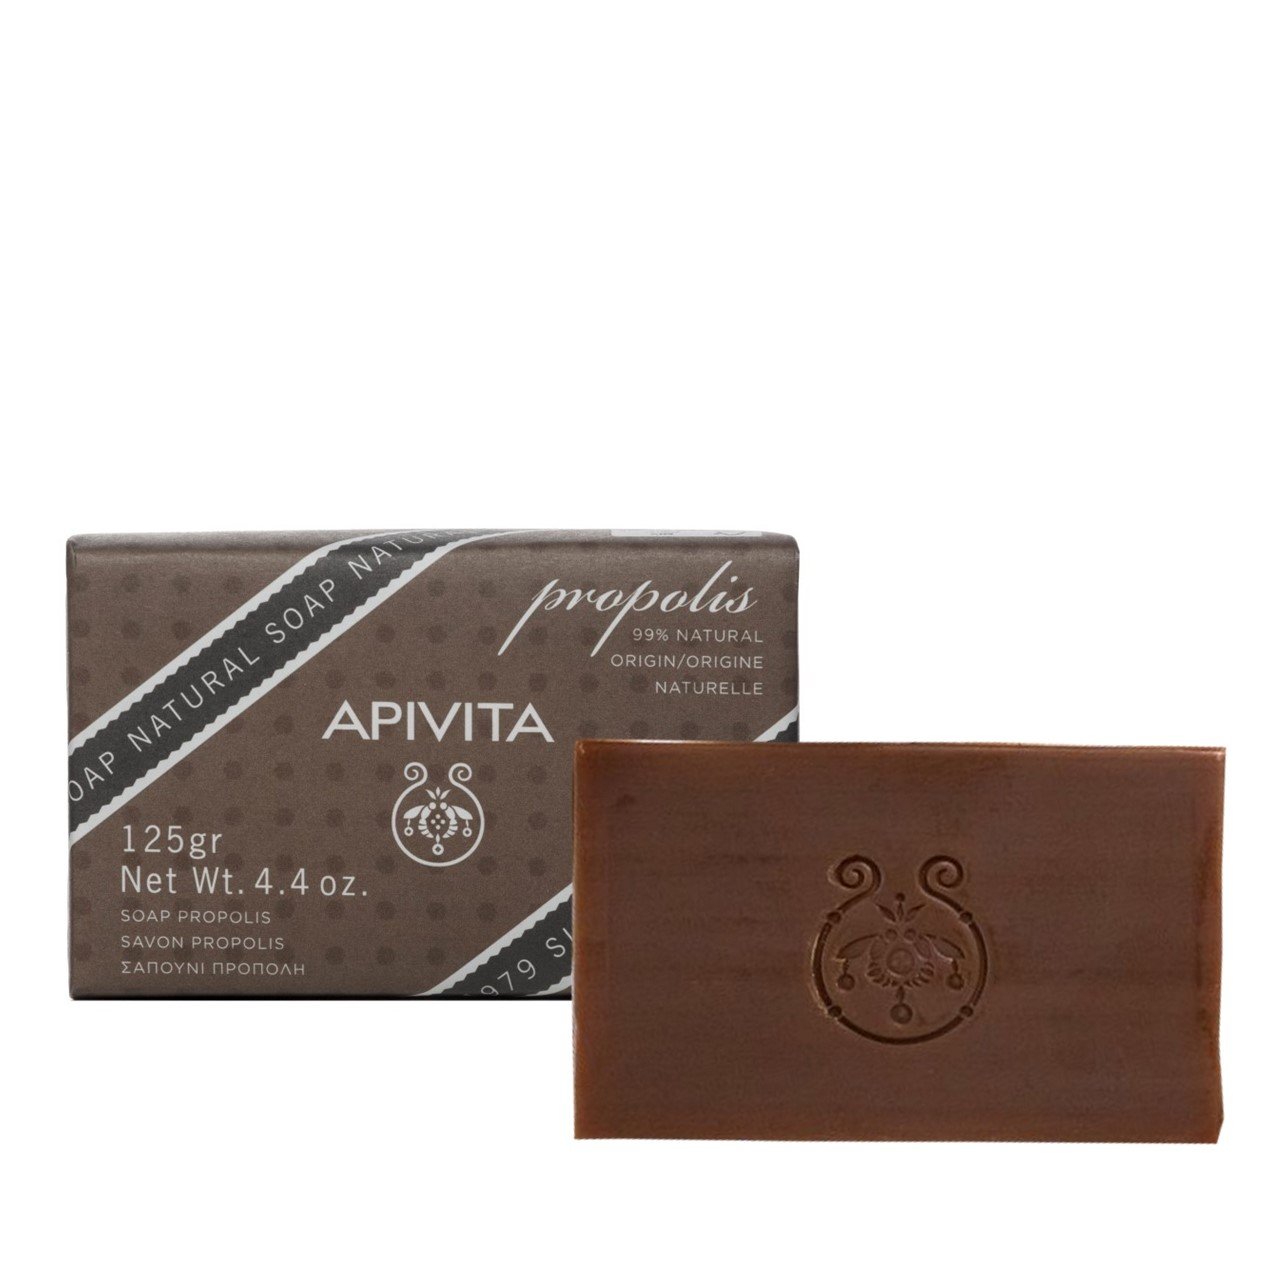 APIVITA Natural Soap with Propolis 125g